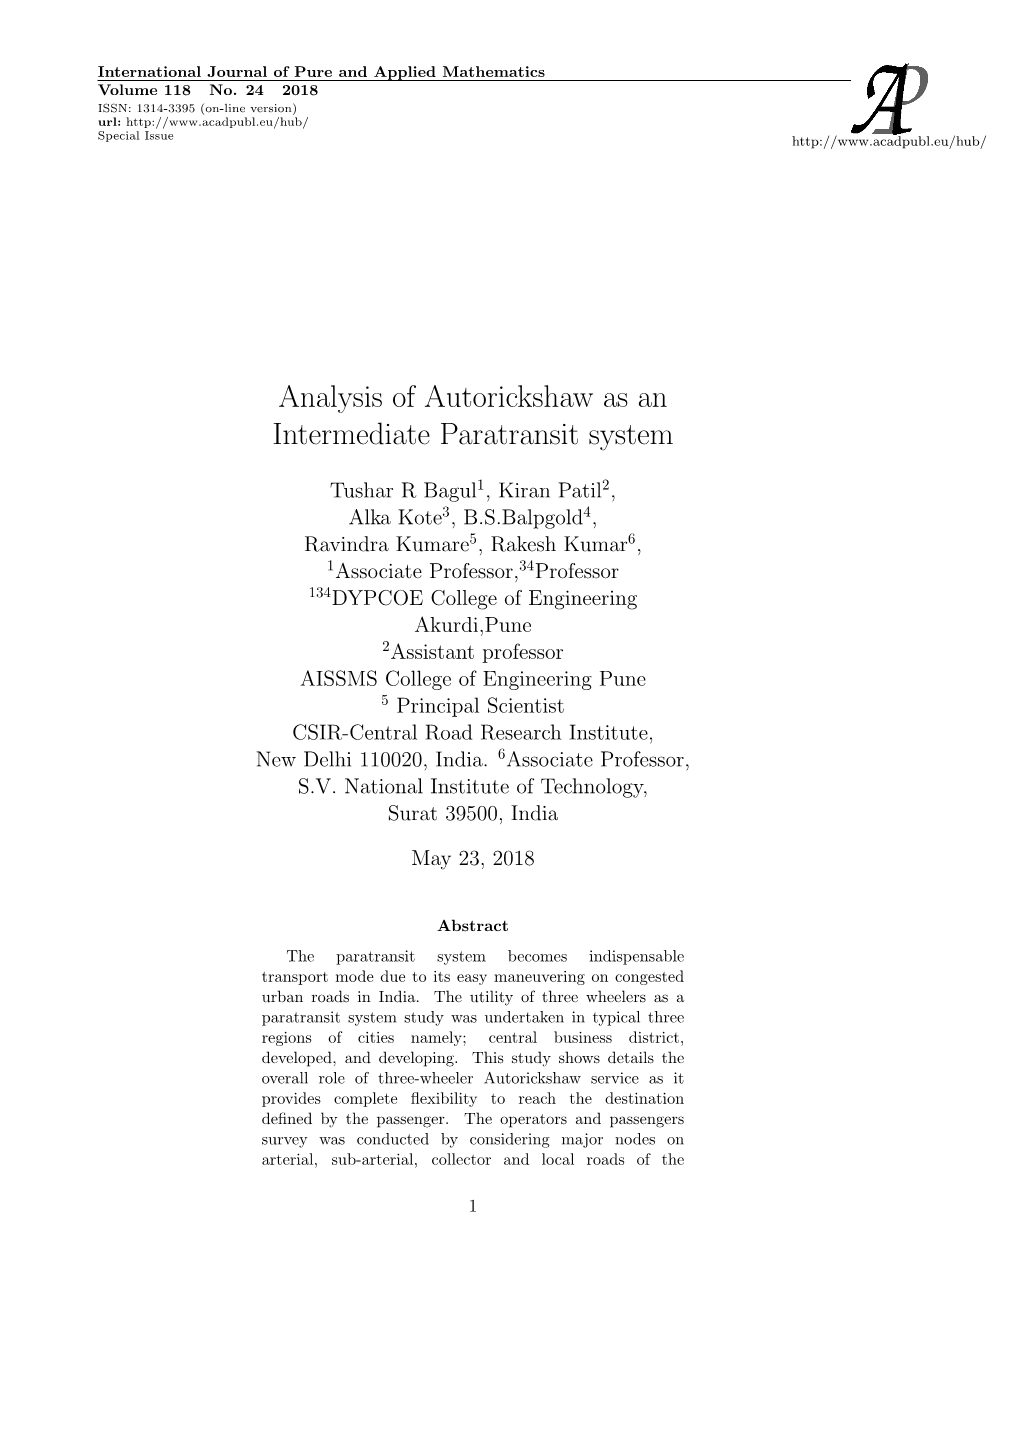 Analysis of Autorickshaw As an Intermediate Paratransit System